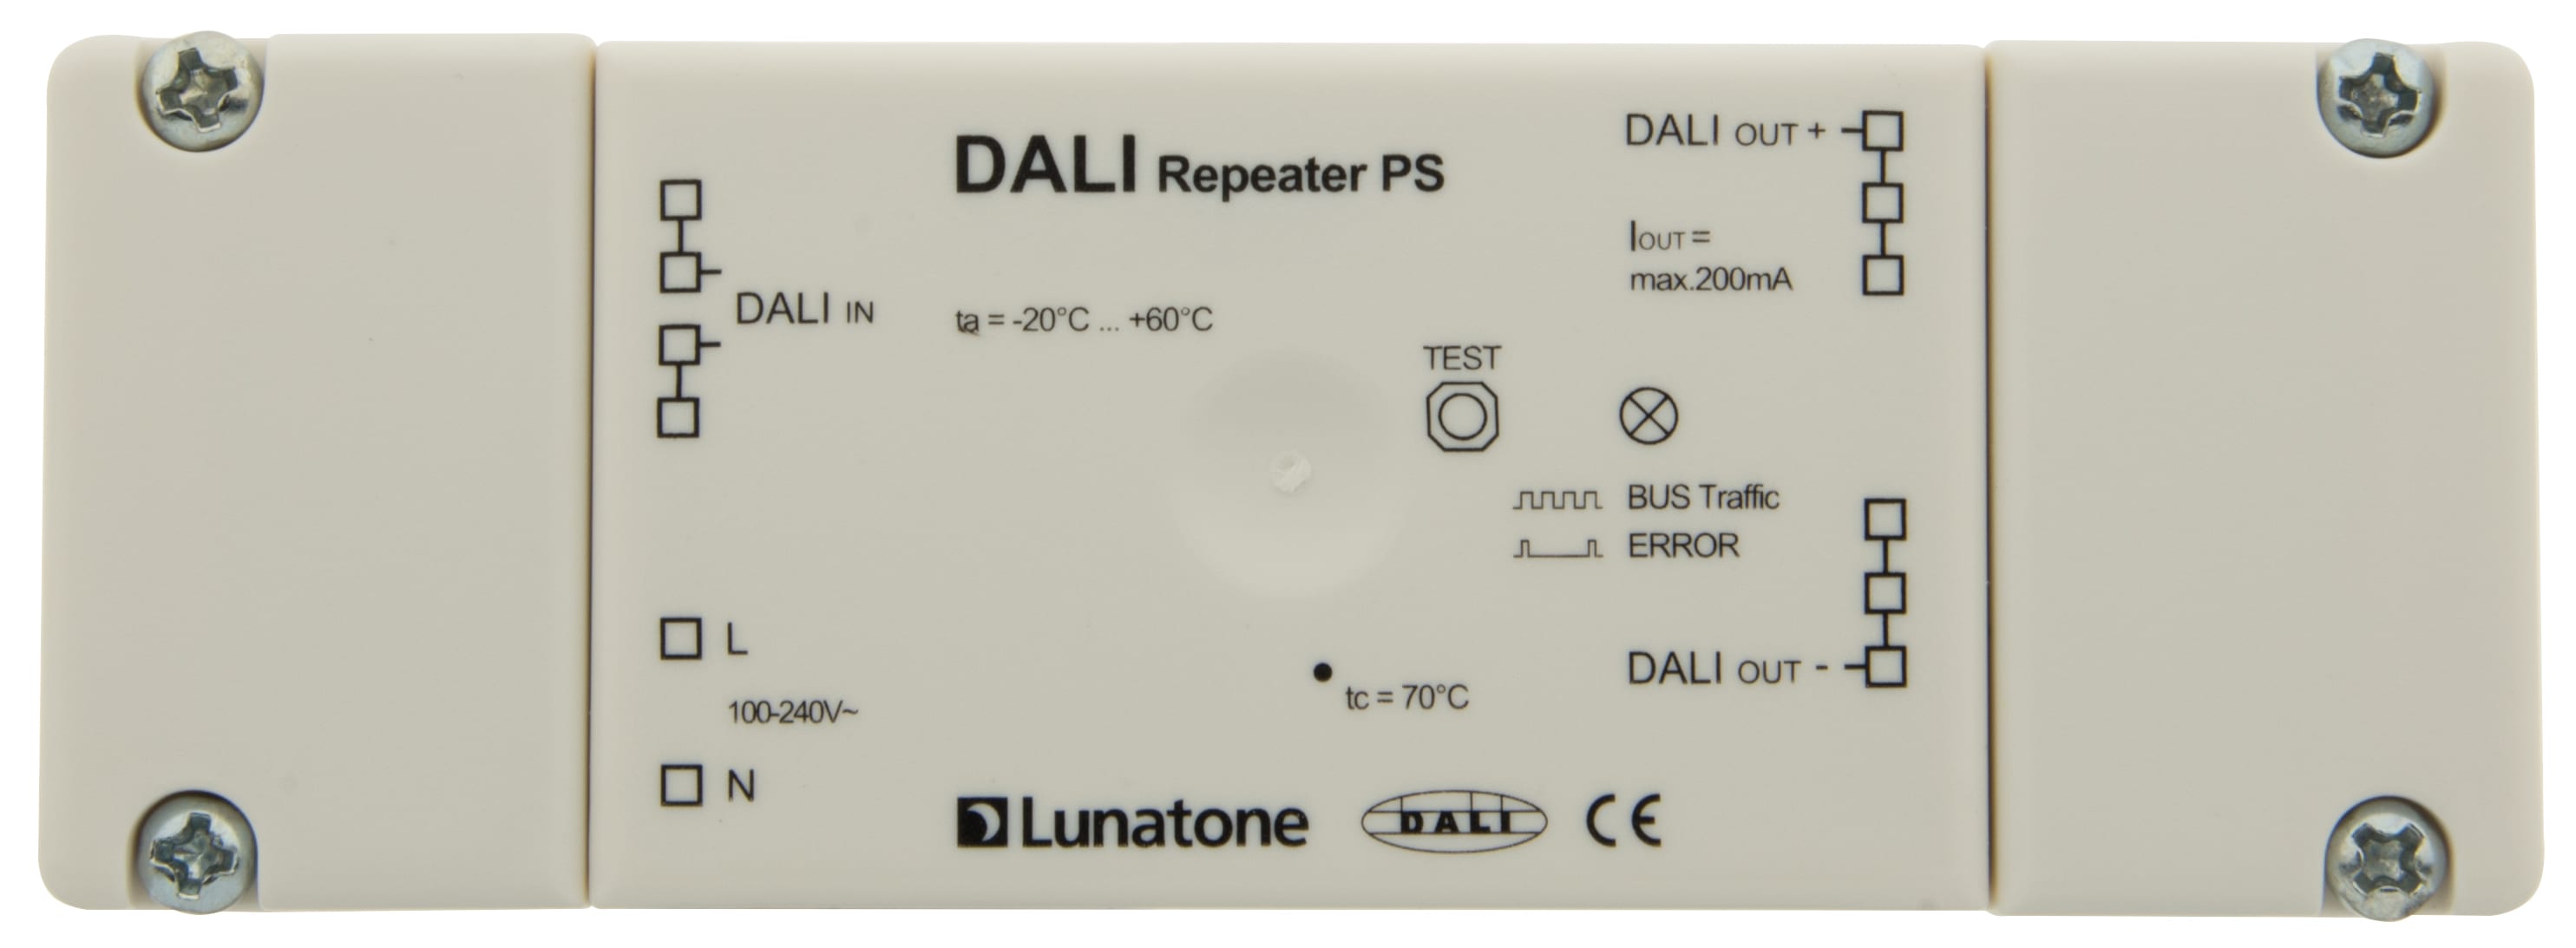 https://autled.com/daten/foto/Produktfoto_DALI-Signal-Repeater-PS_1_v1.jpg